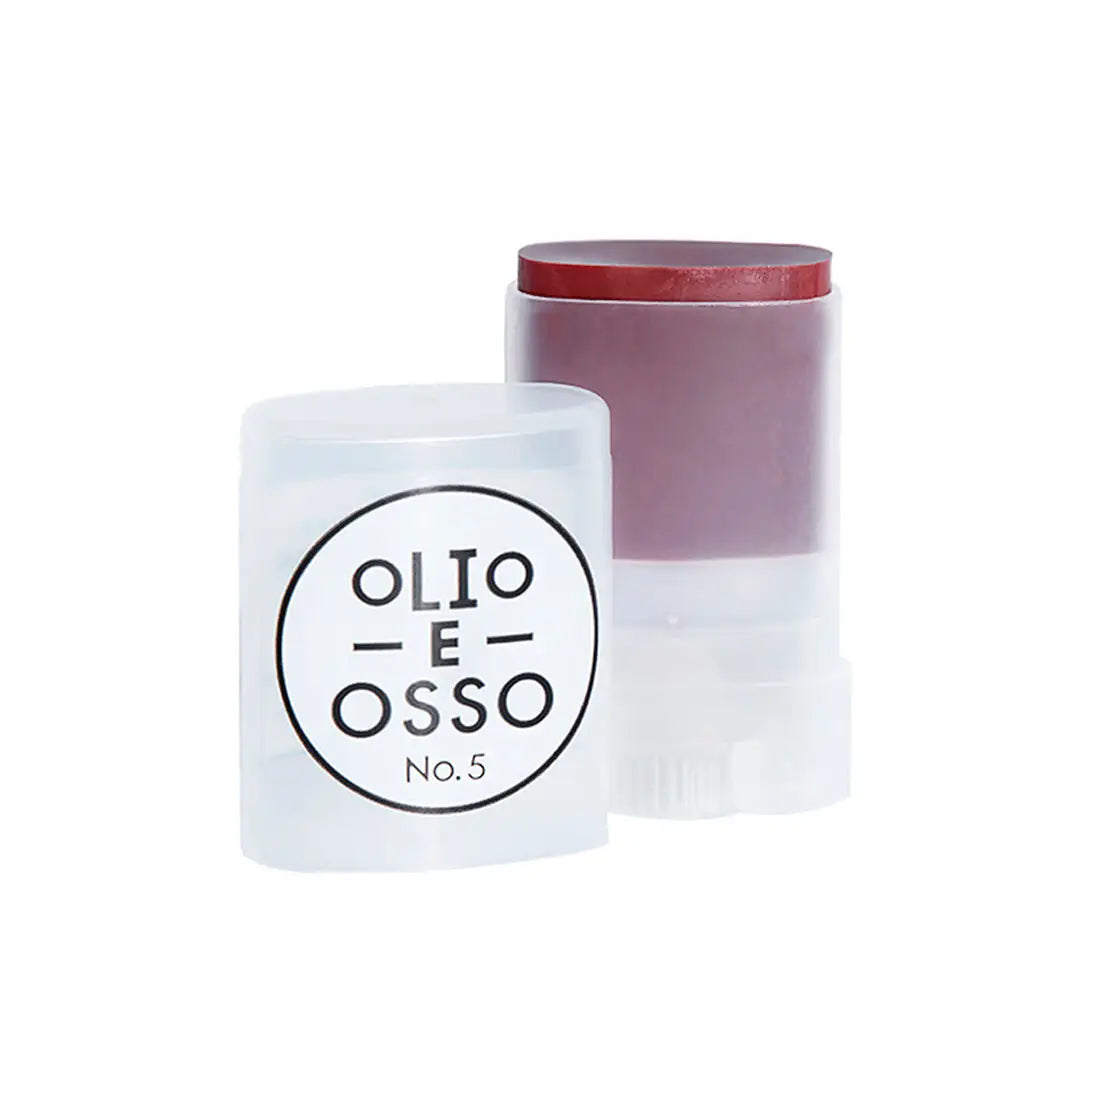 Olio E Osso Tinted Balm No. 5 Currant - Free Shipping 